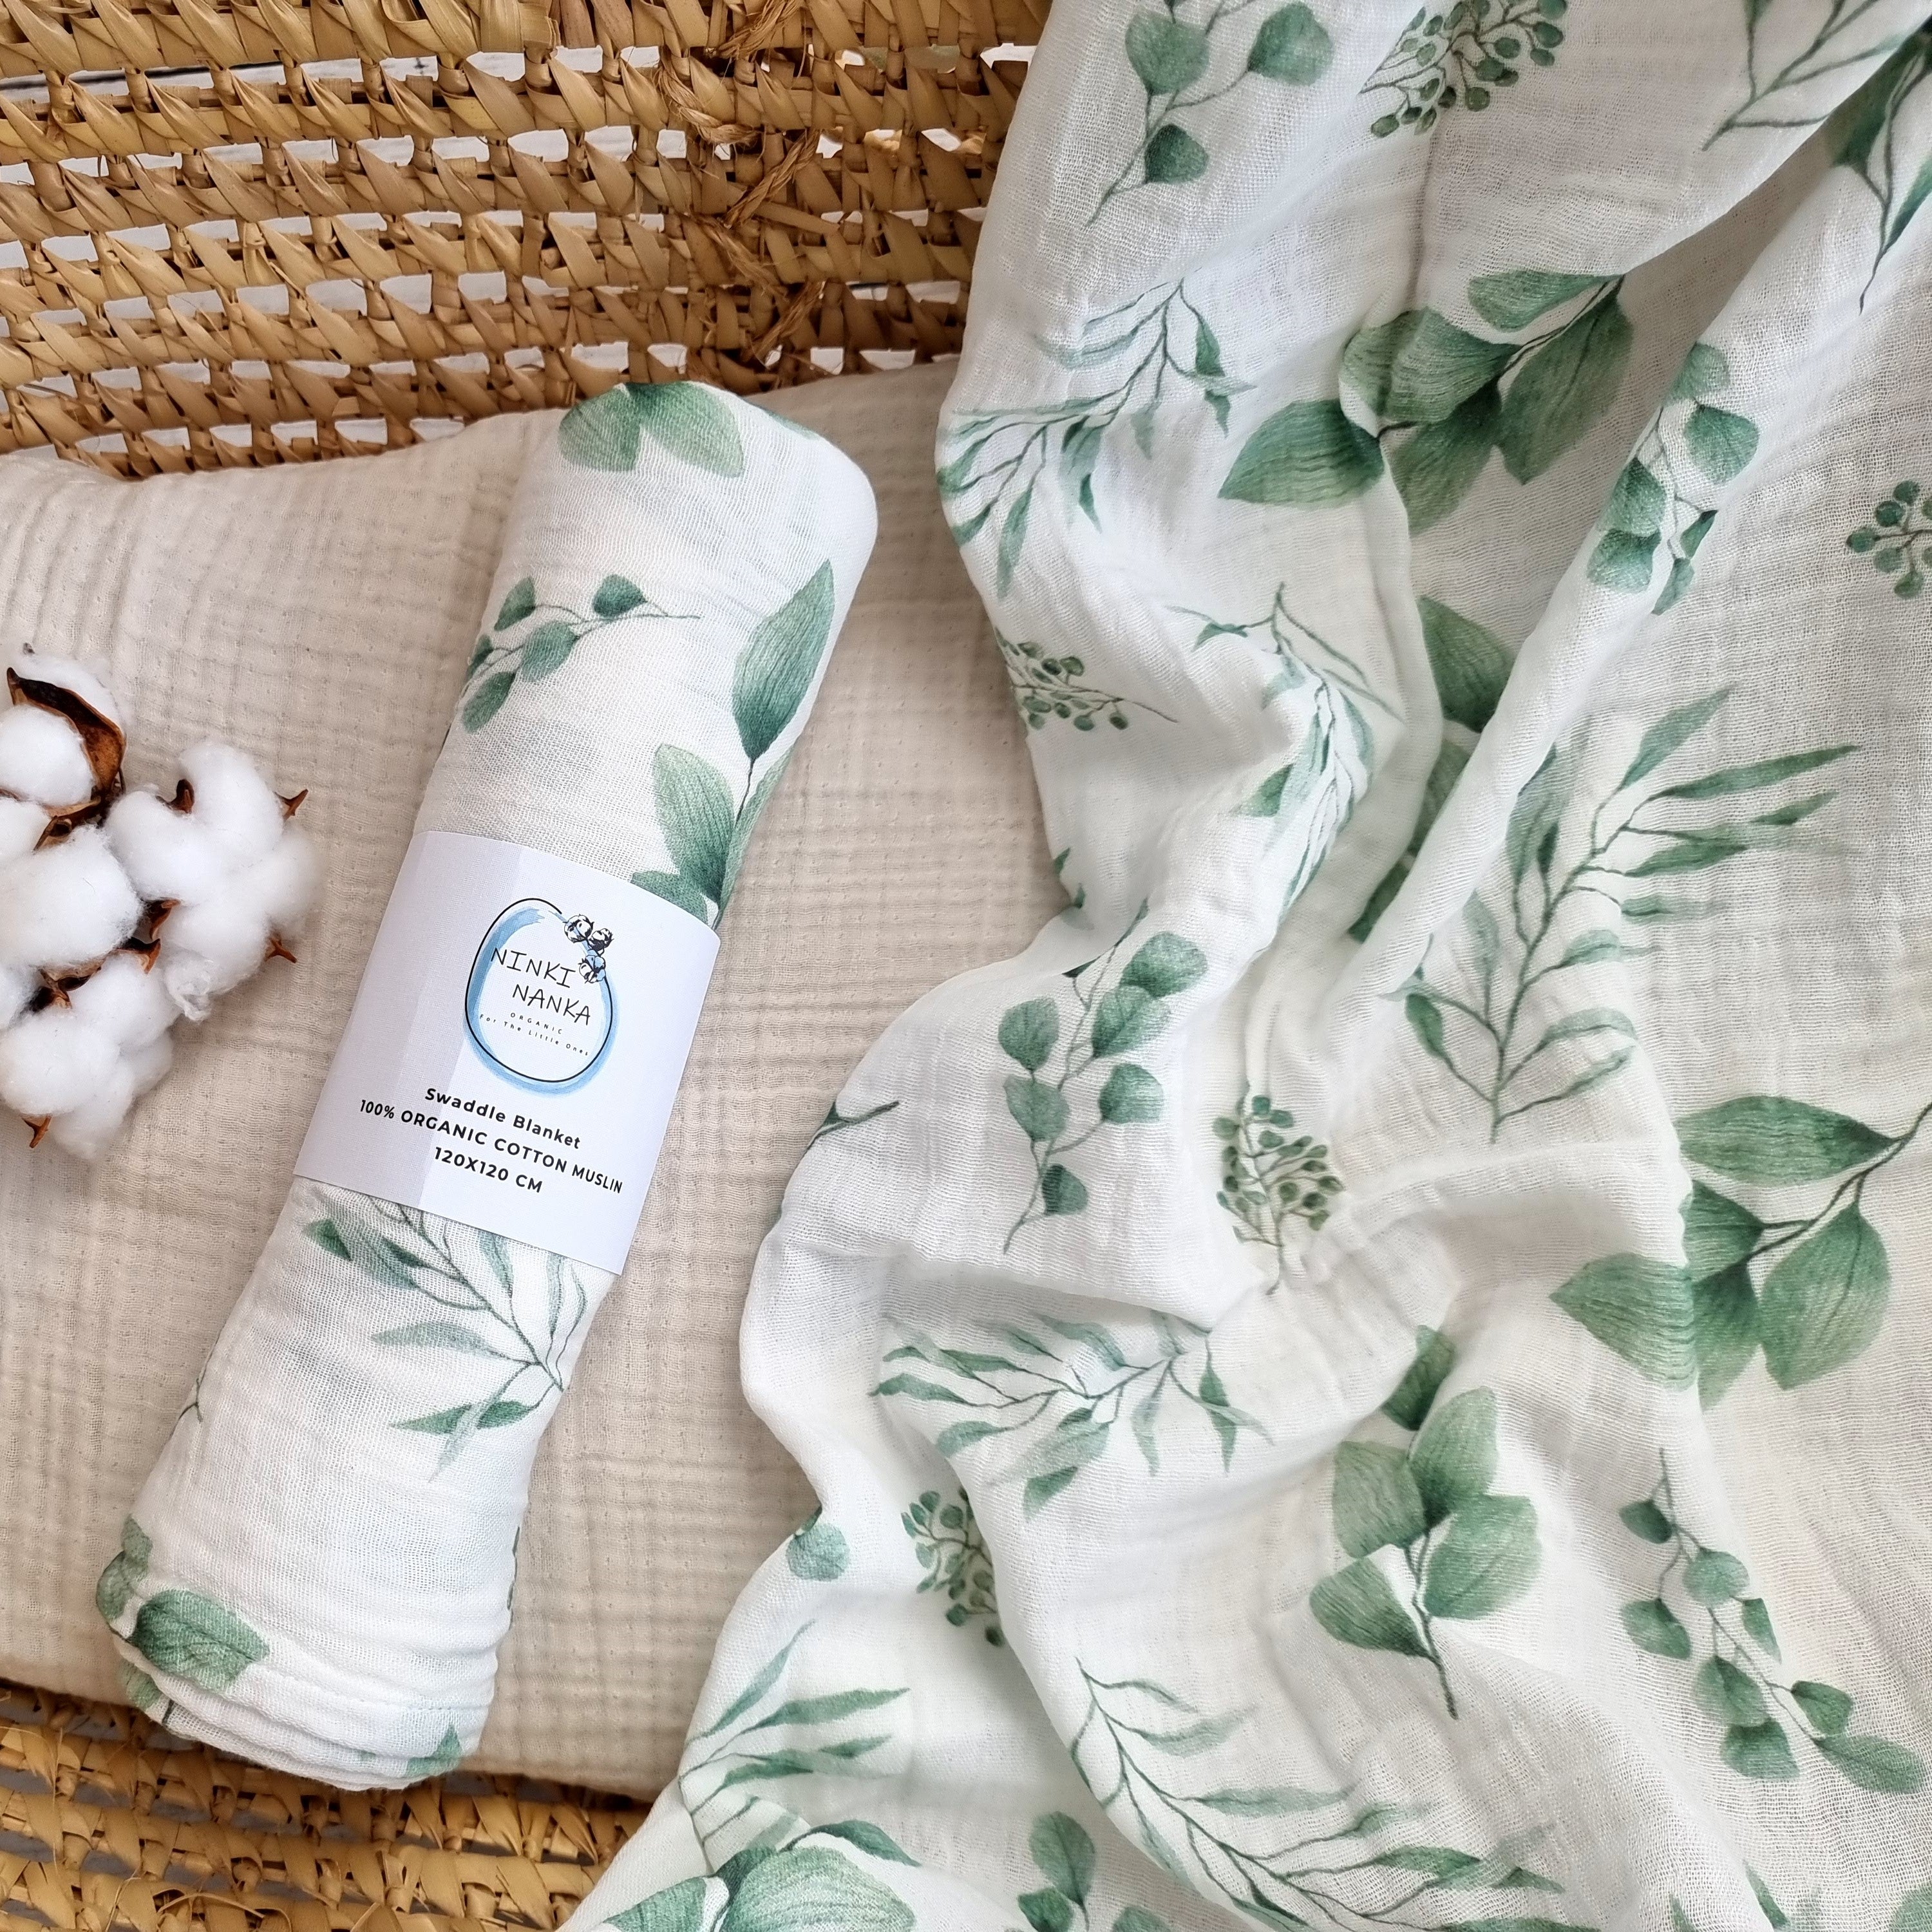 Ninki Nanka Swaddle Blankets - The perfect way to keep your baby snug and safe